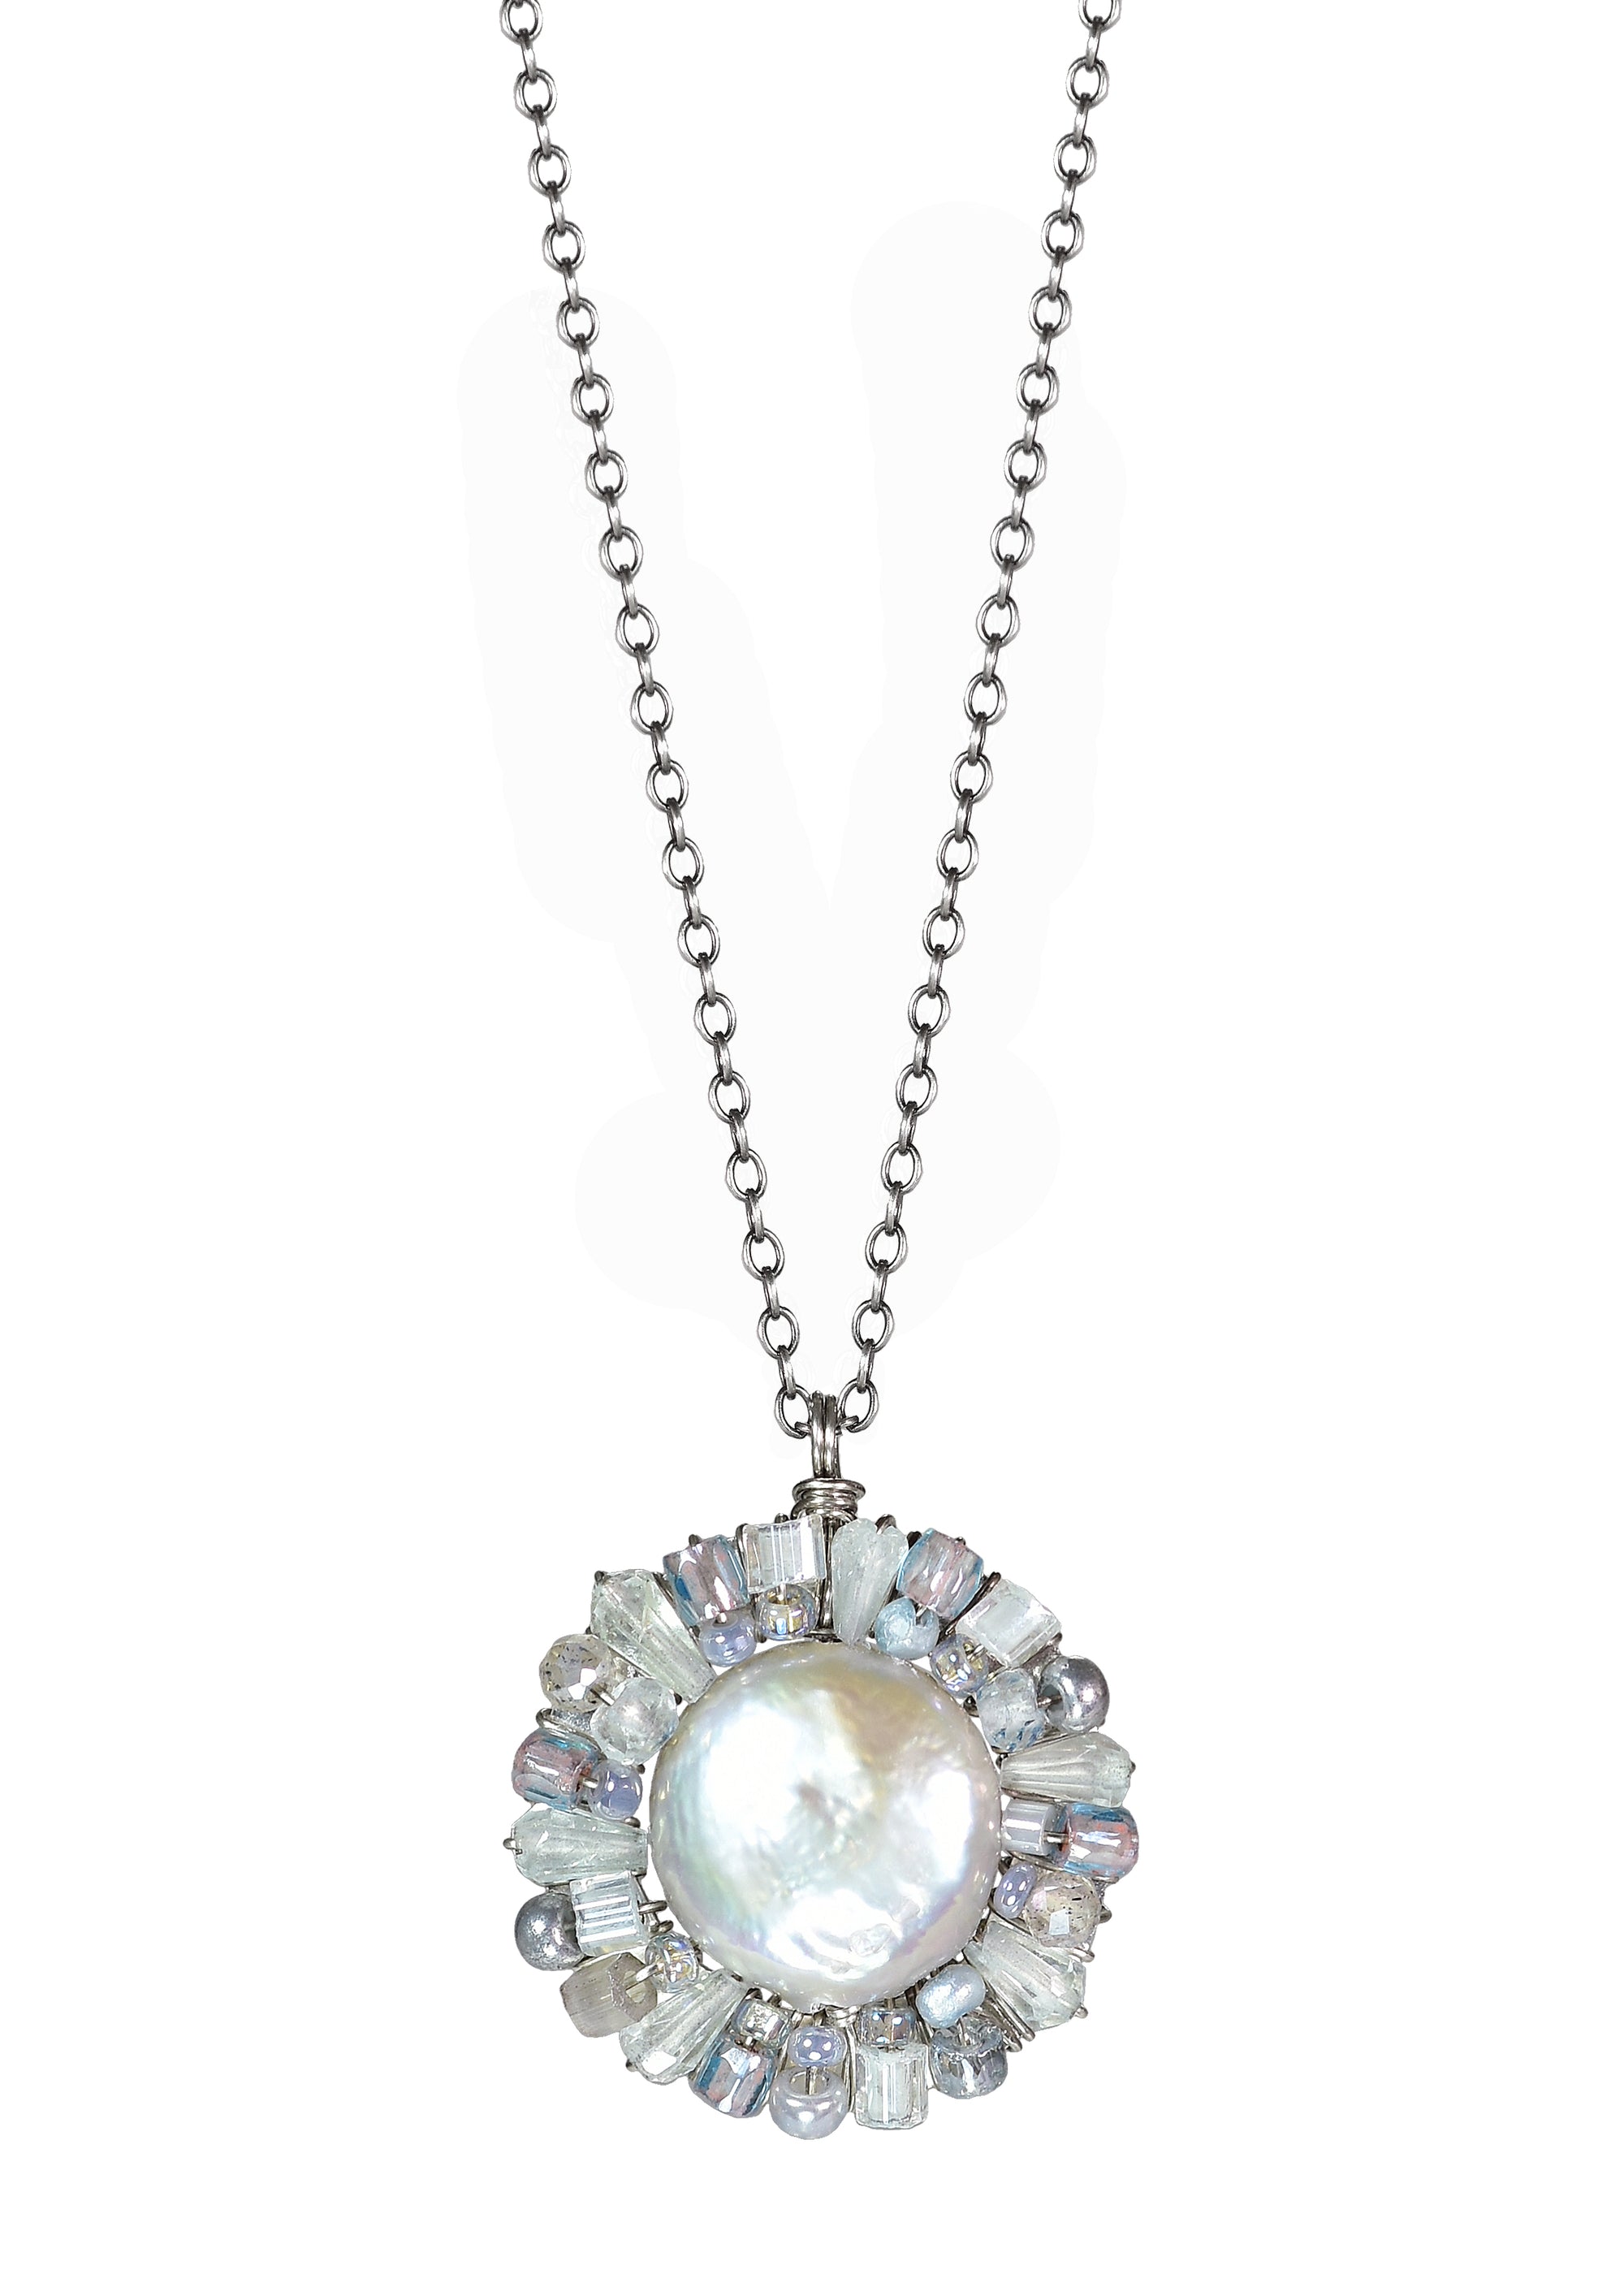 Freshwater pearl Aquamarine Labradorite Seed beads Sterling silver Necklace measures 17" in length Pendant measures 5/8" in diameter Handmade in our Los Angeles studio